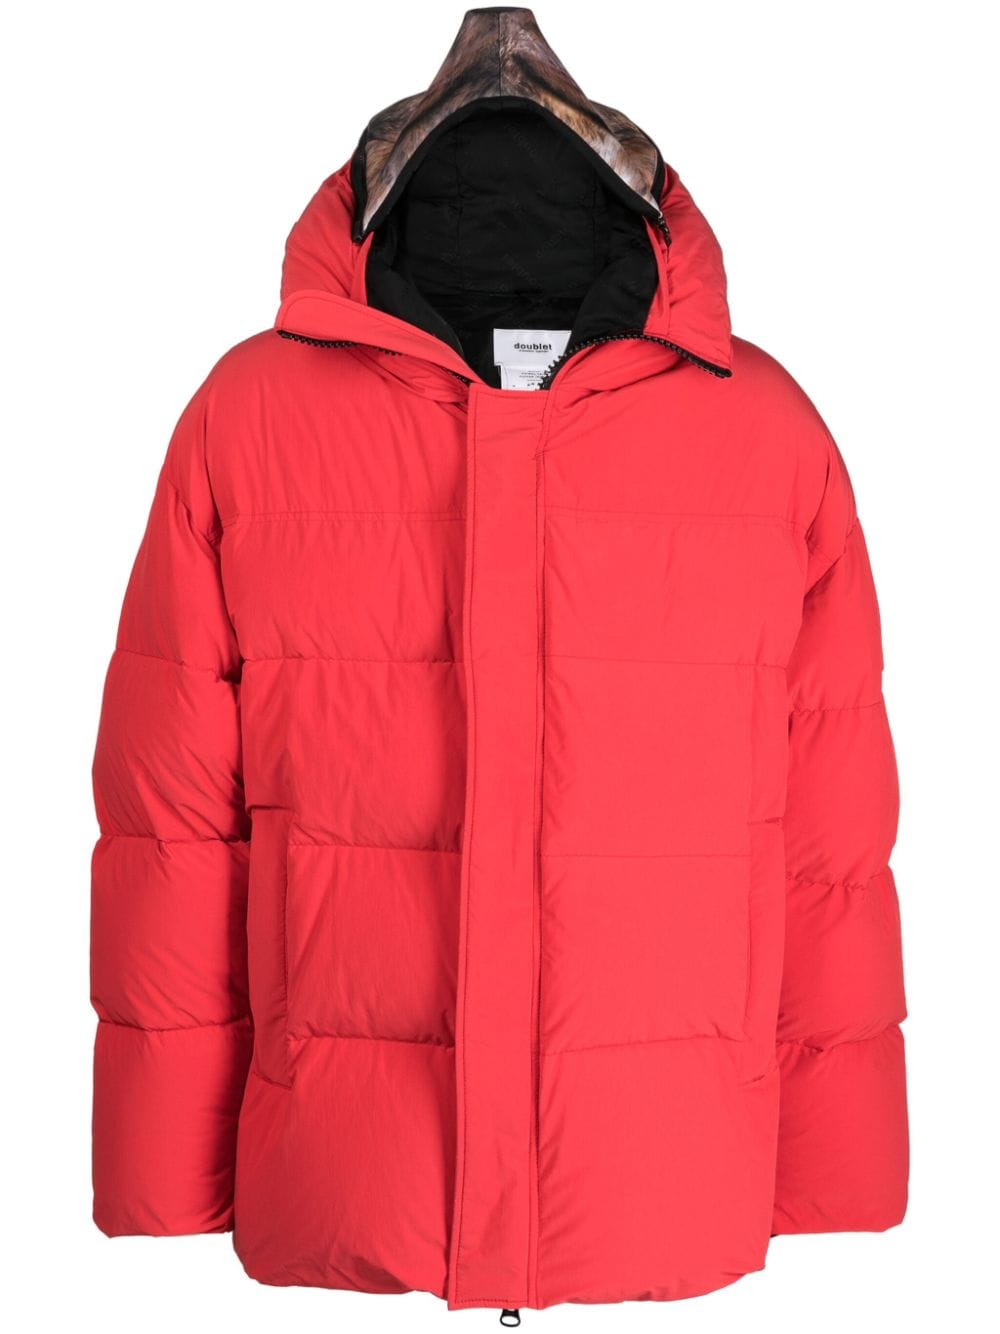 Doublet padded animal motif-hoodie jacket - Red von Doublet